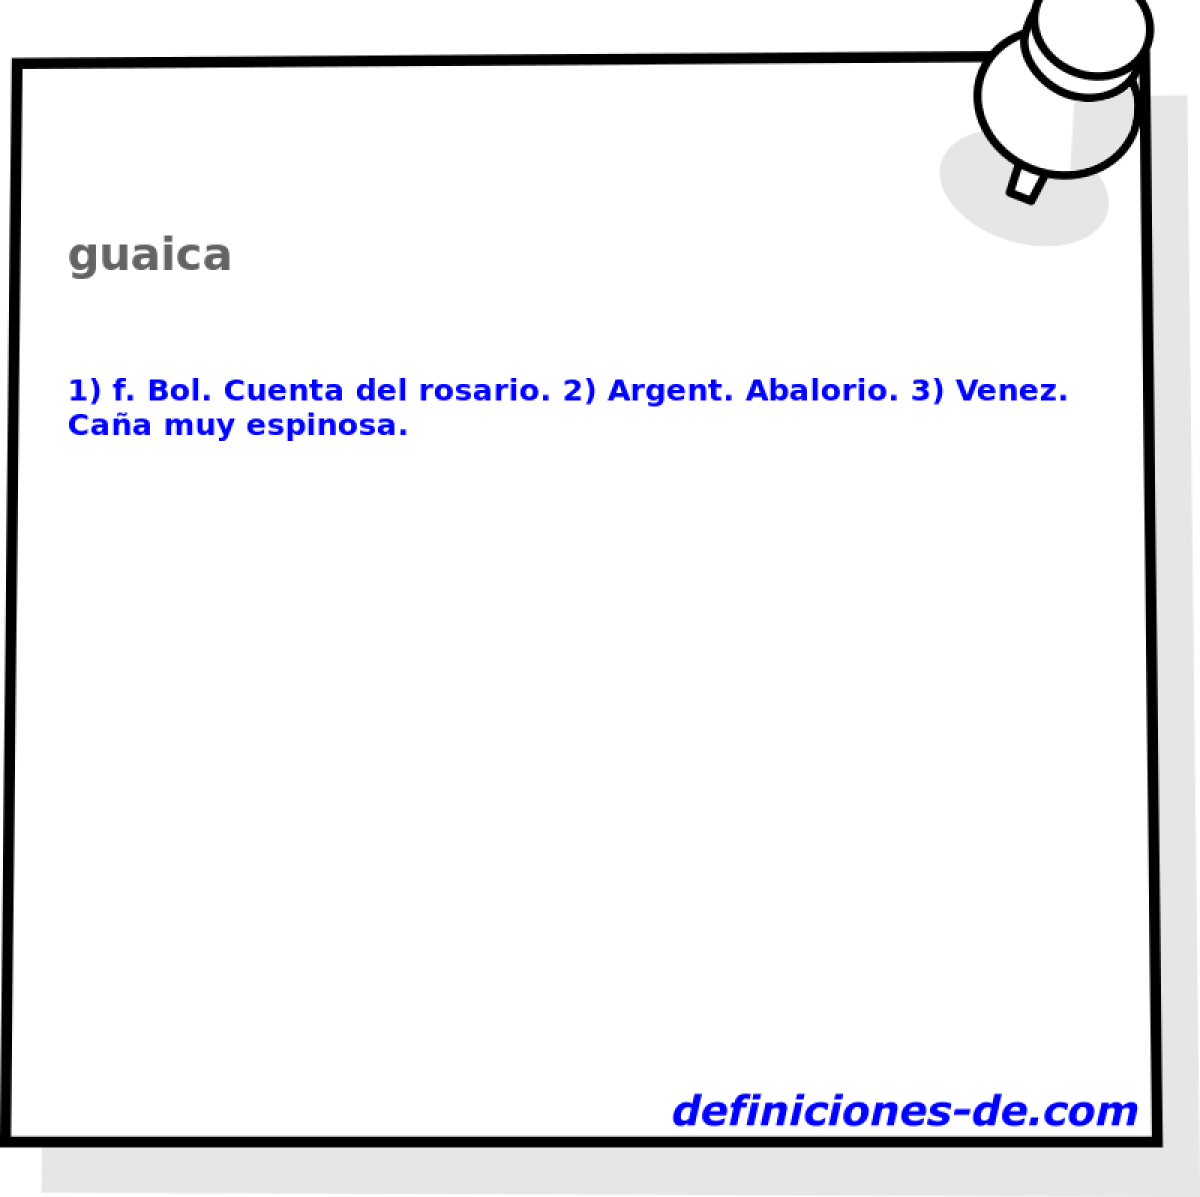 guaica 